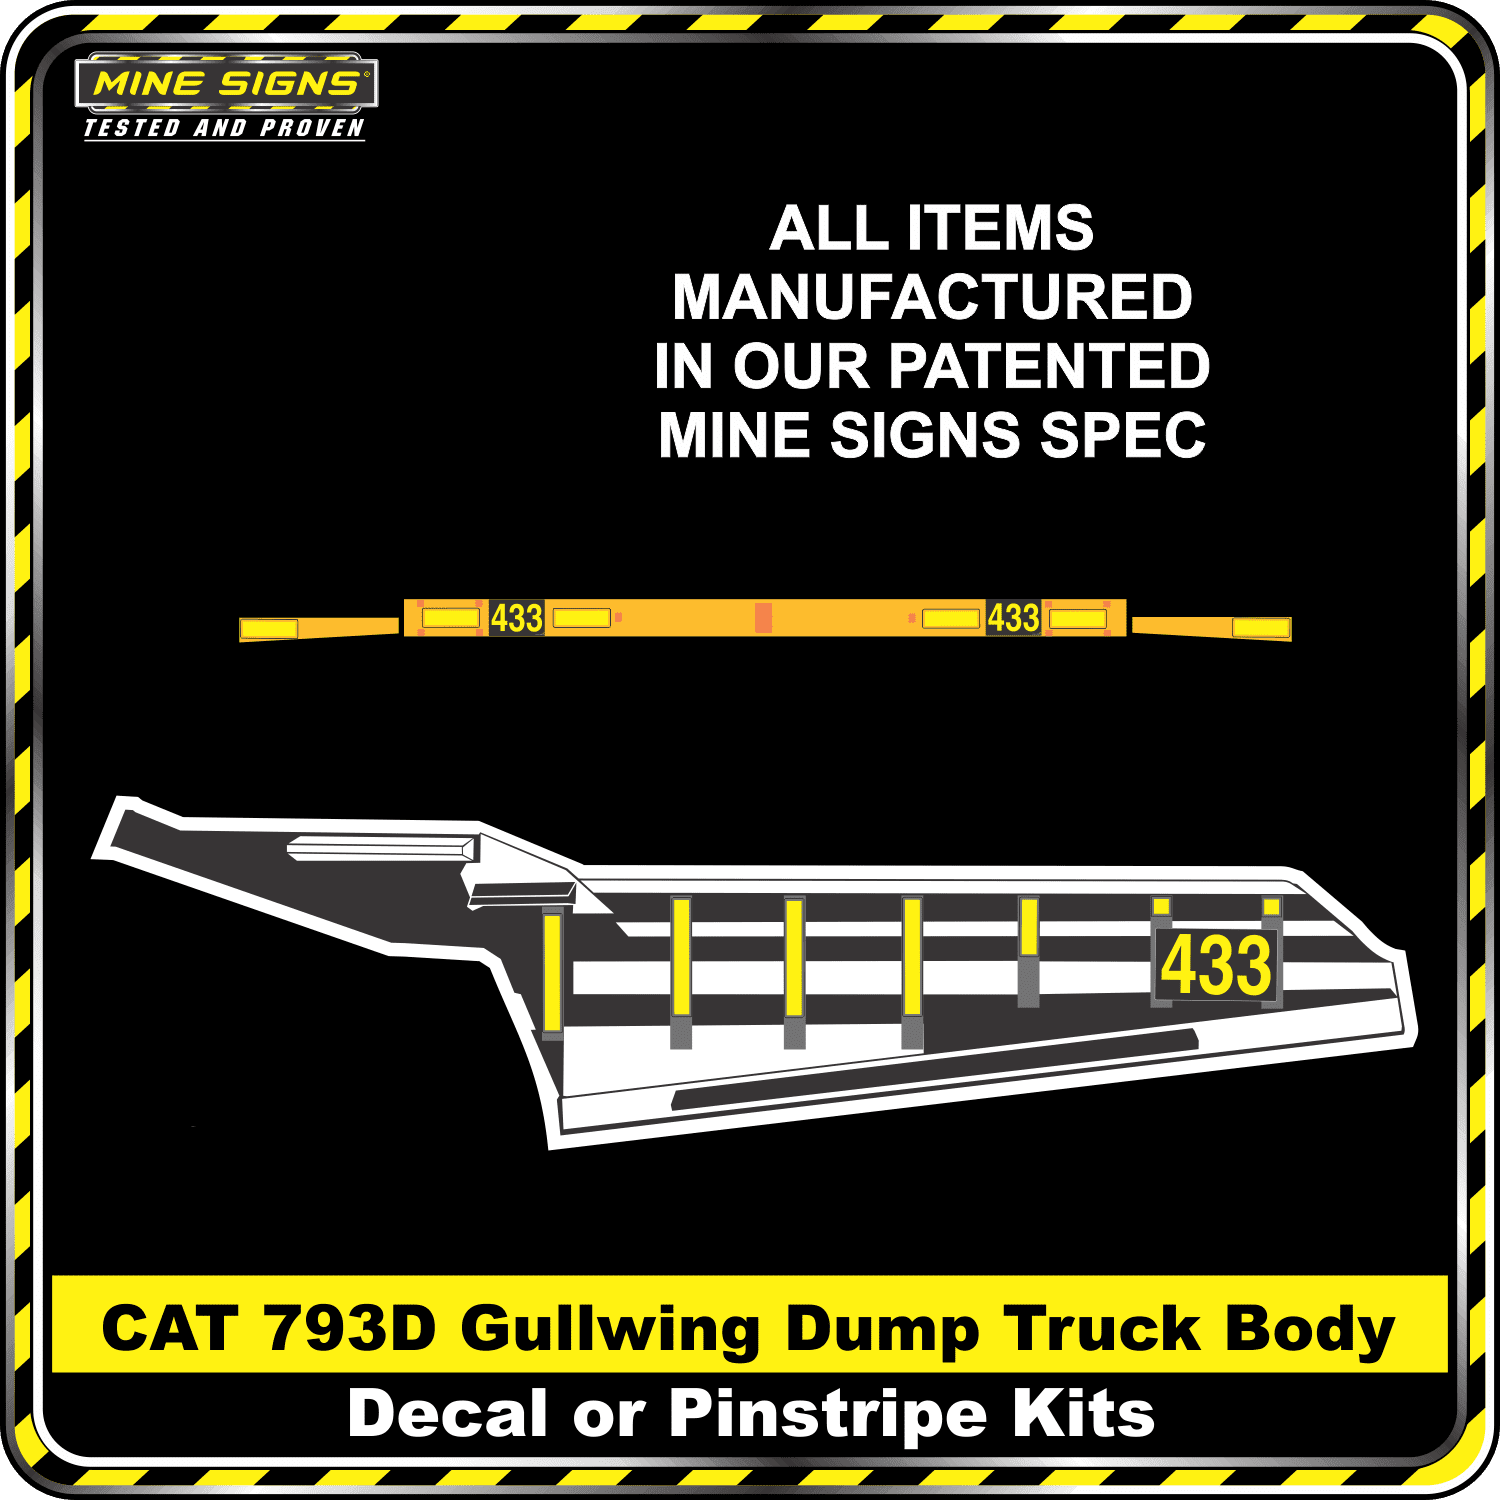 Mine Signs Spec Kit - Cat 793D Gullwing Body decal pinstripe